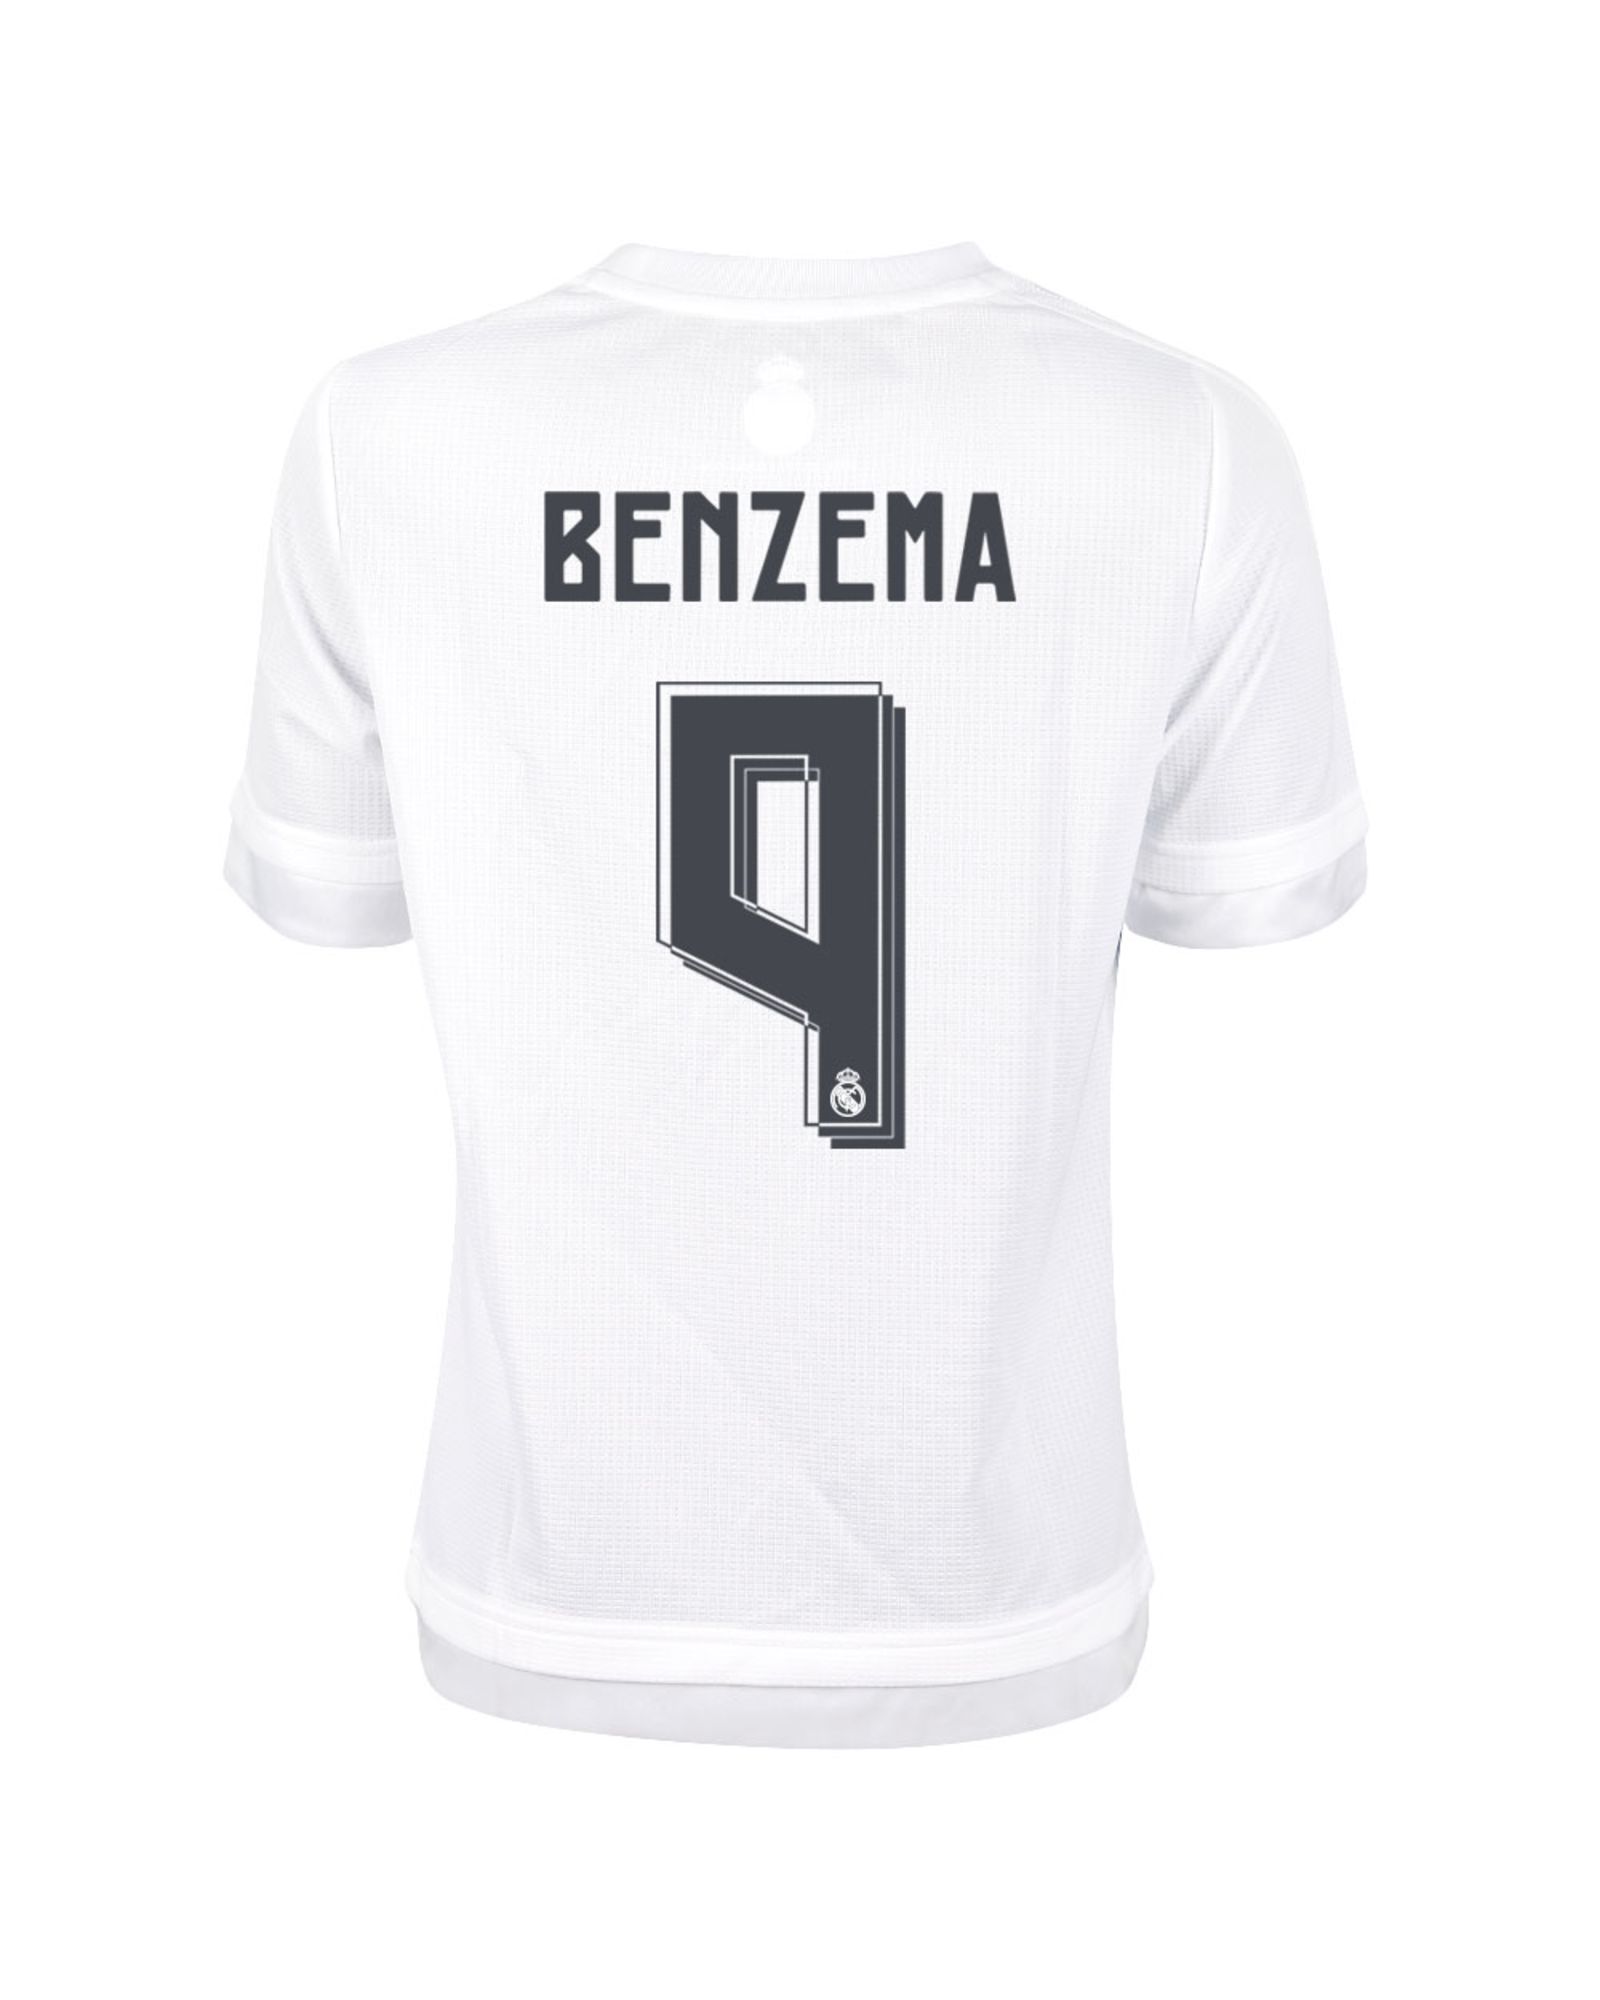 Camiseta 1ª Real Madrid 2015/2016 Benzema Junior - Fútbol Factory